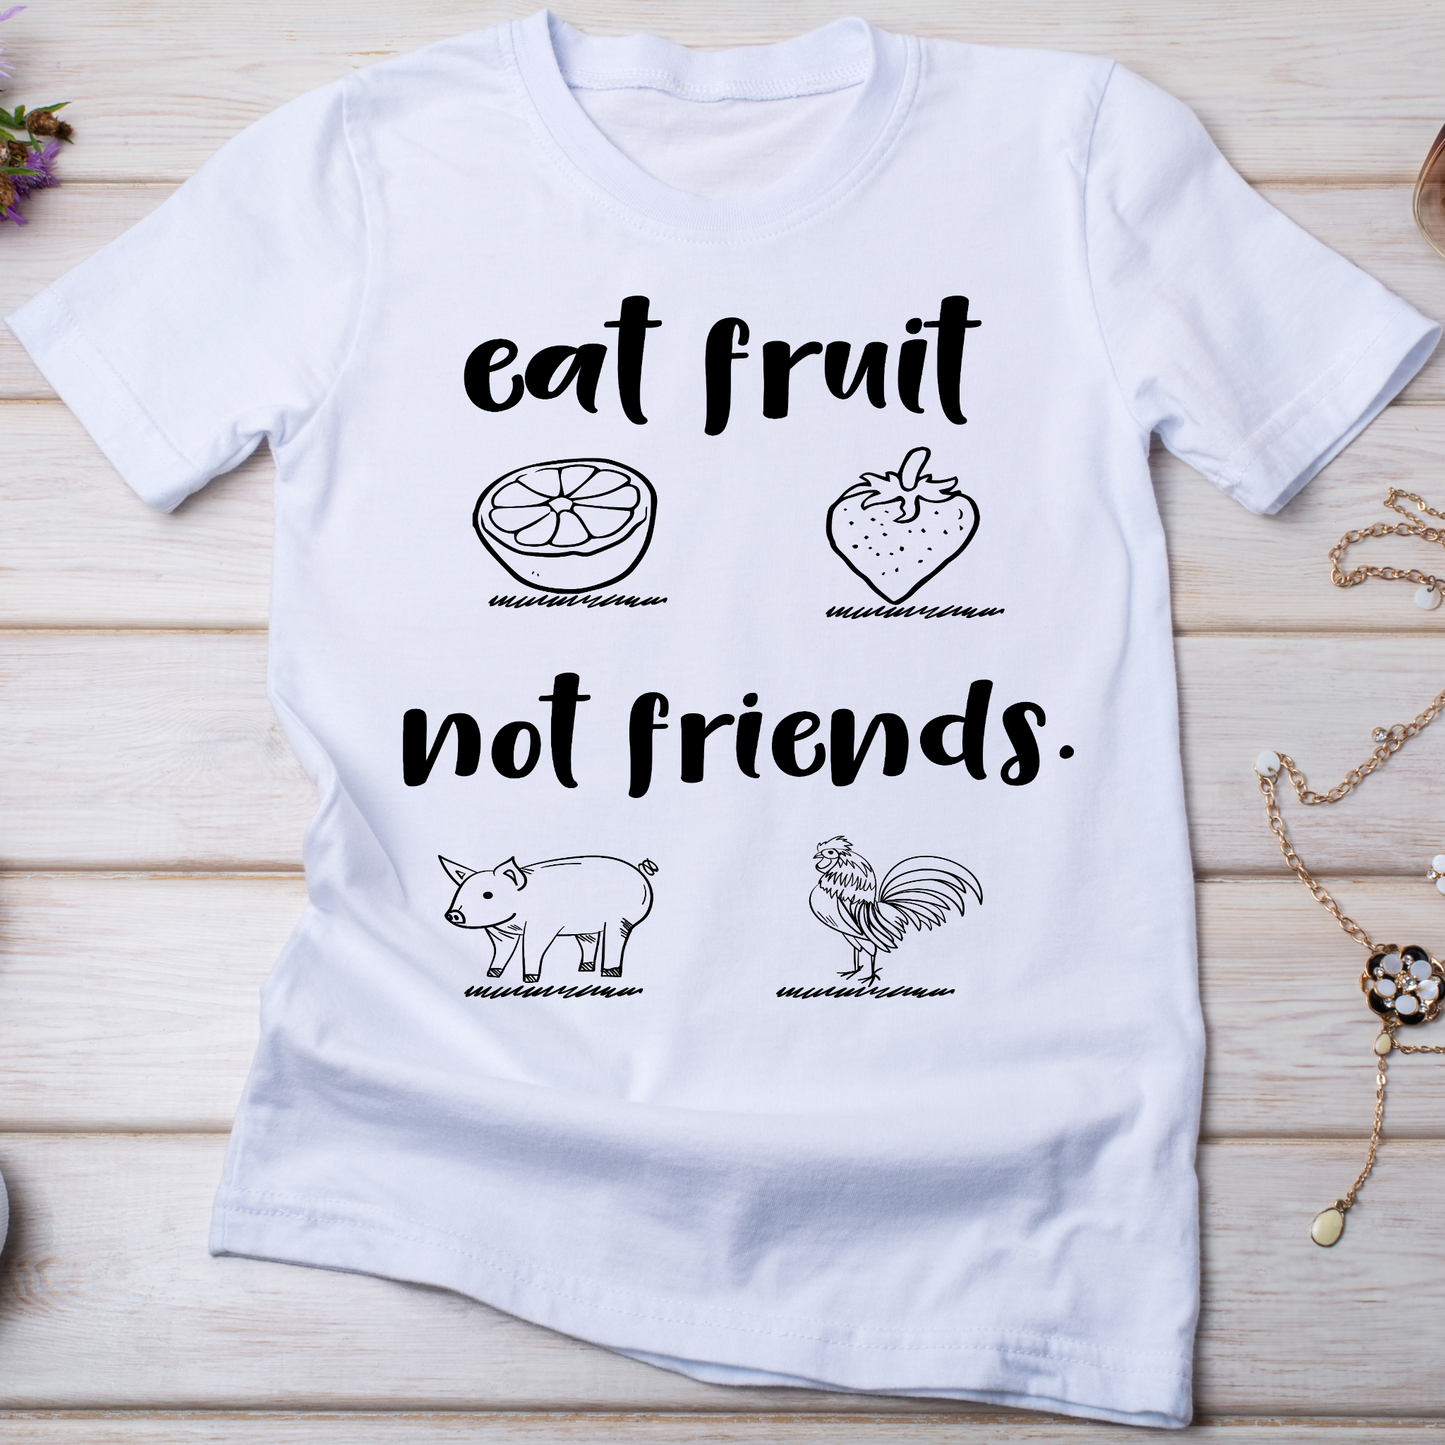 Eat fruit not friends Women's vegan t-shirt - Premium t-shirt from Lees Krazy Teez - Just $19.95! Shop now at Lees Krazy Teez